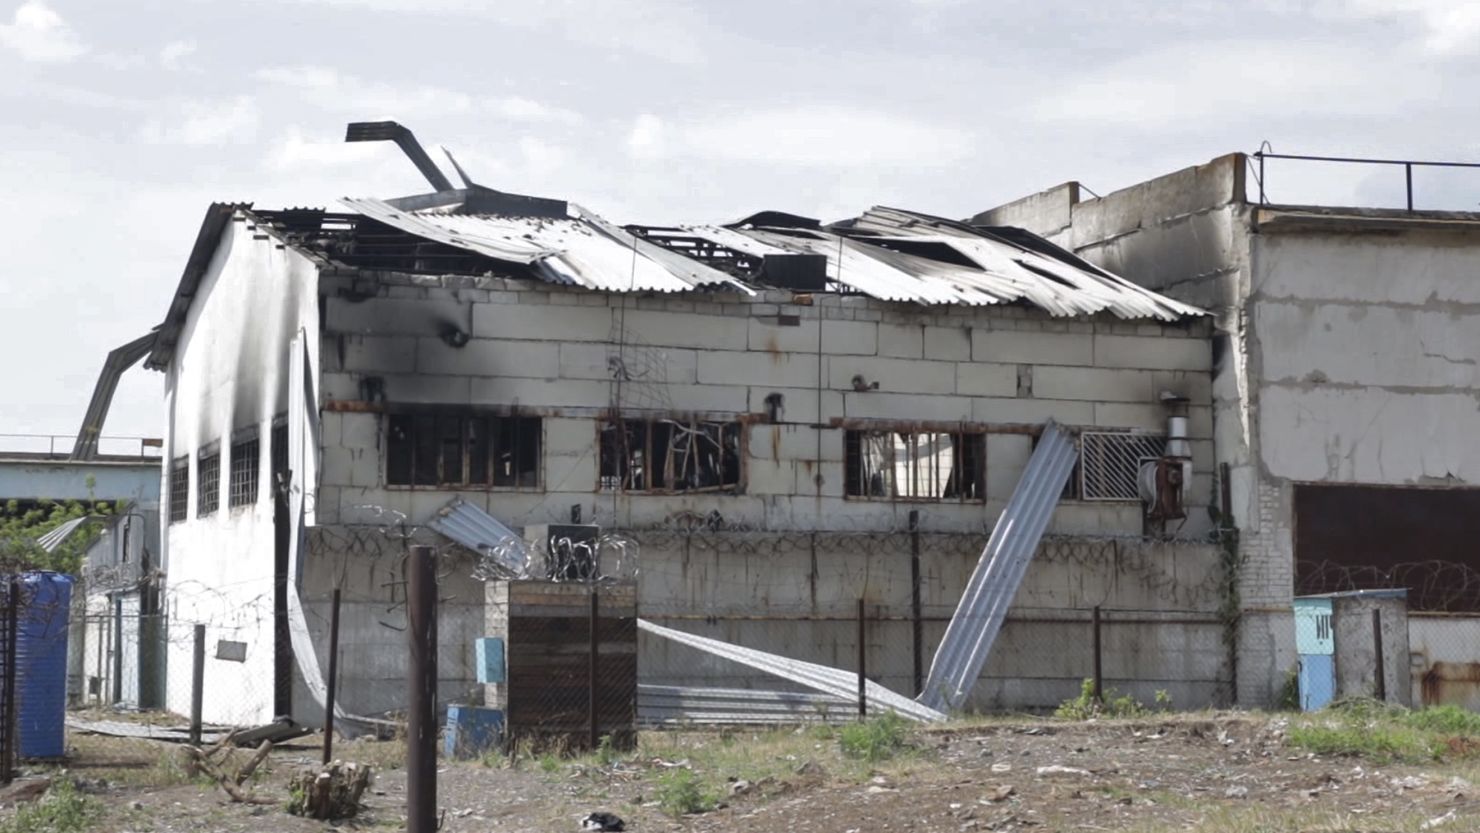 A destroyed barrack at a prison in Olenivka.